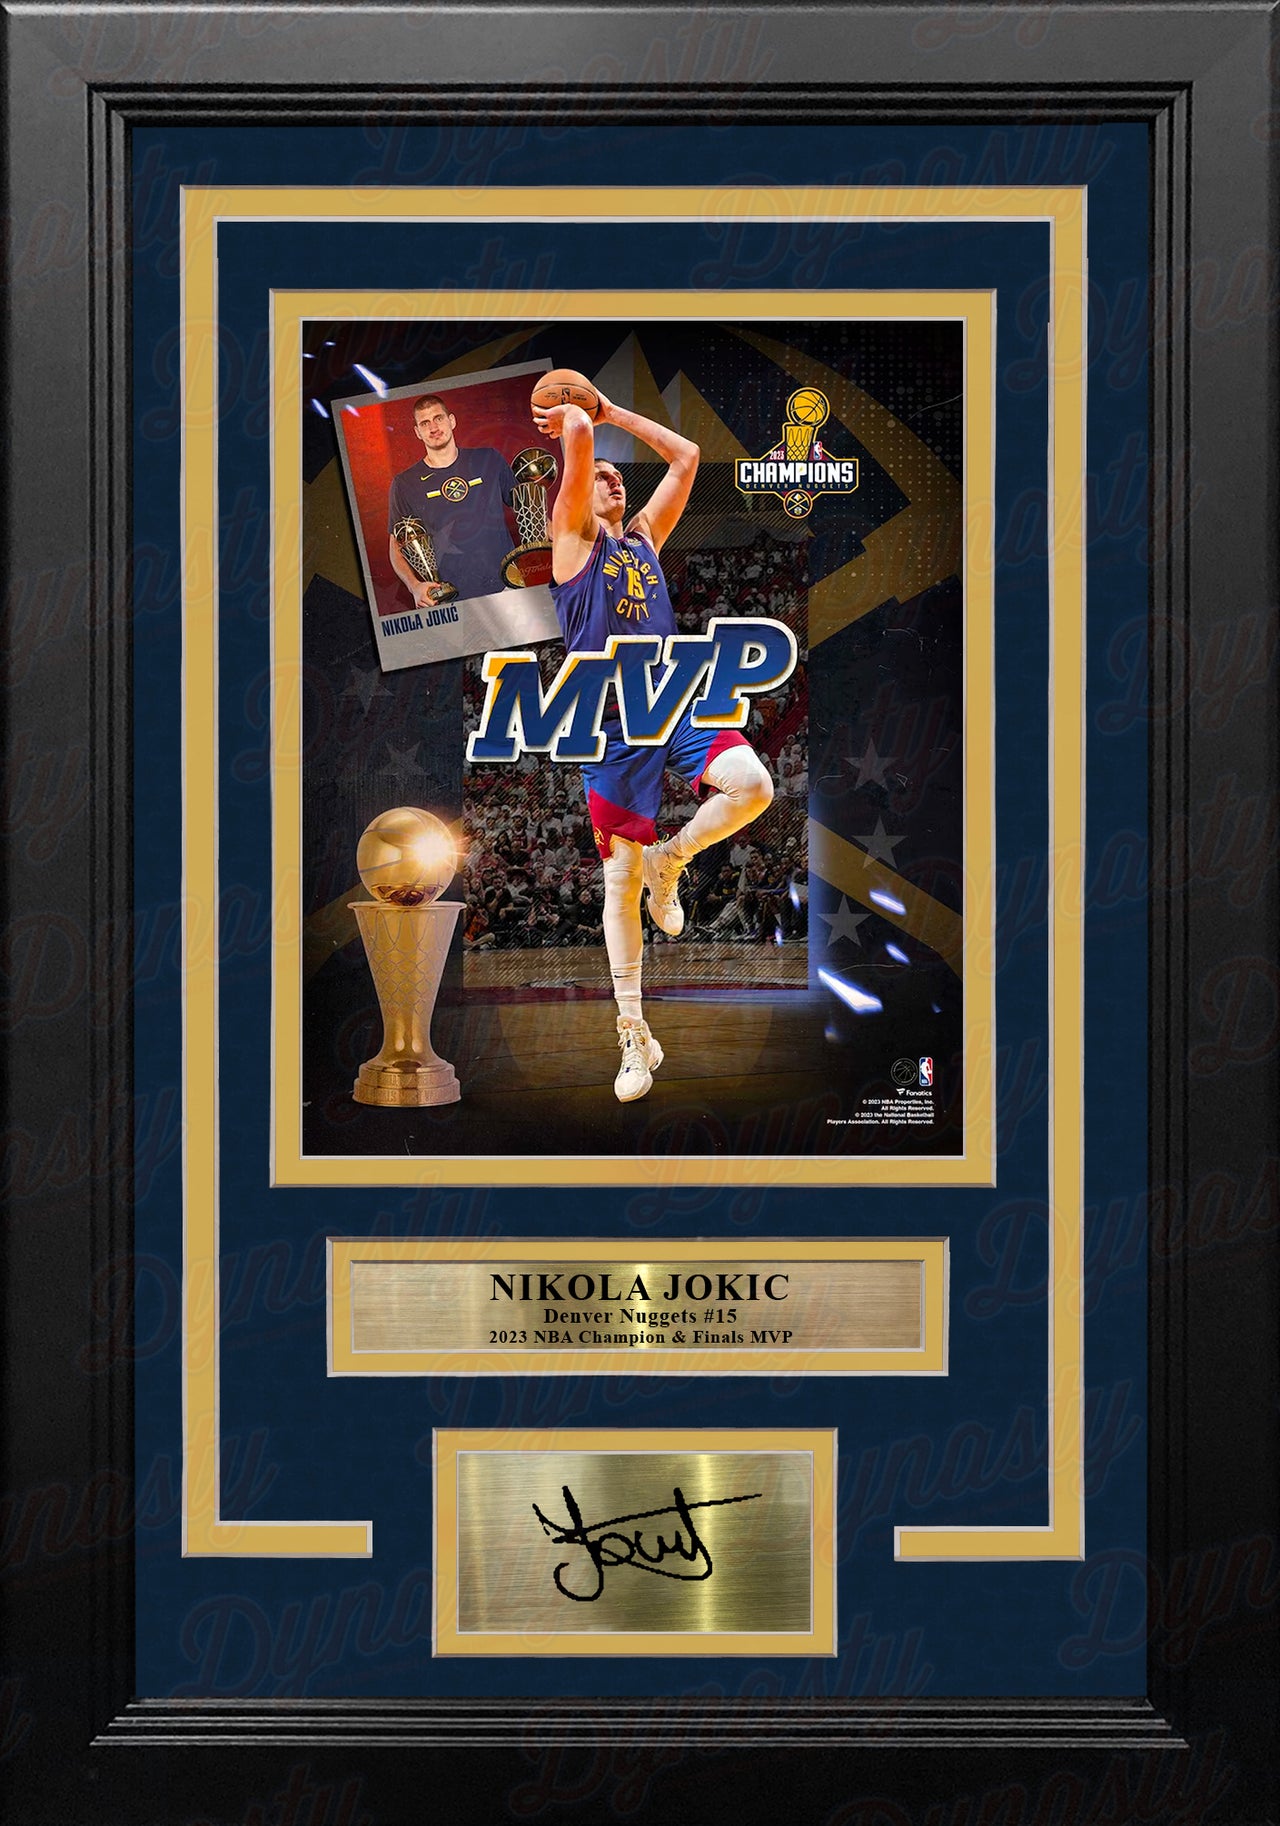 Nikola Jokic 2023 NBA Finals MVP Denver Nuggets 8x10 Framed Basketball Photo with Engraved Autograph - Dynasty Sports & Framing 